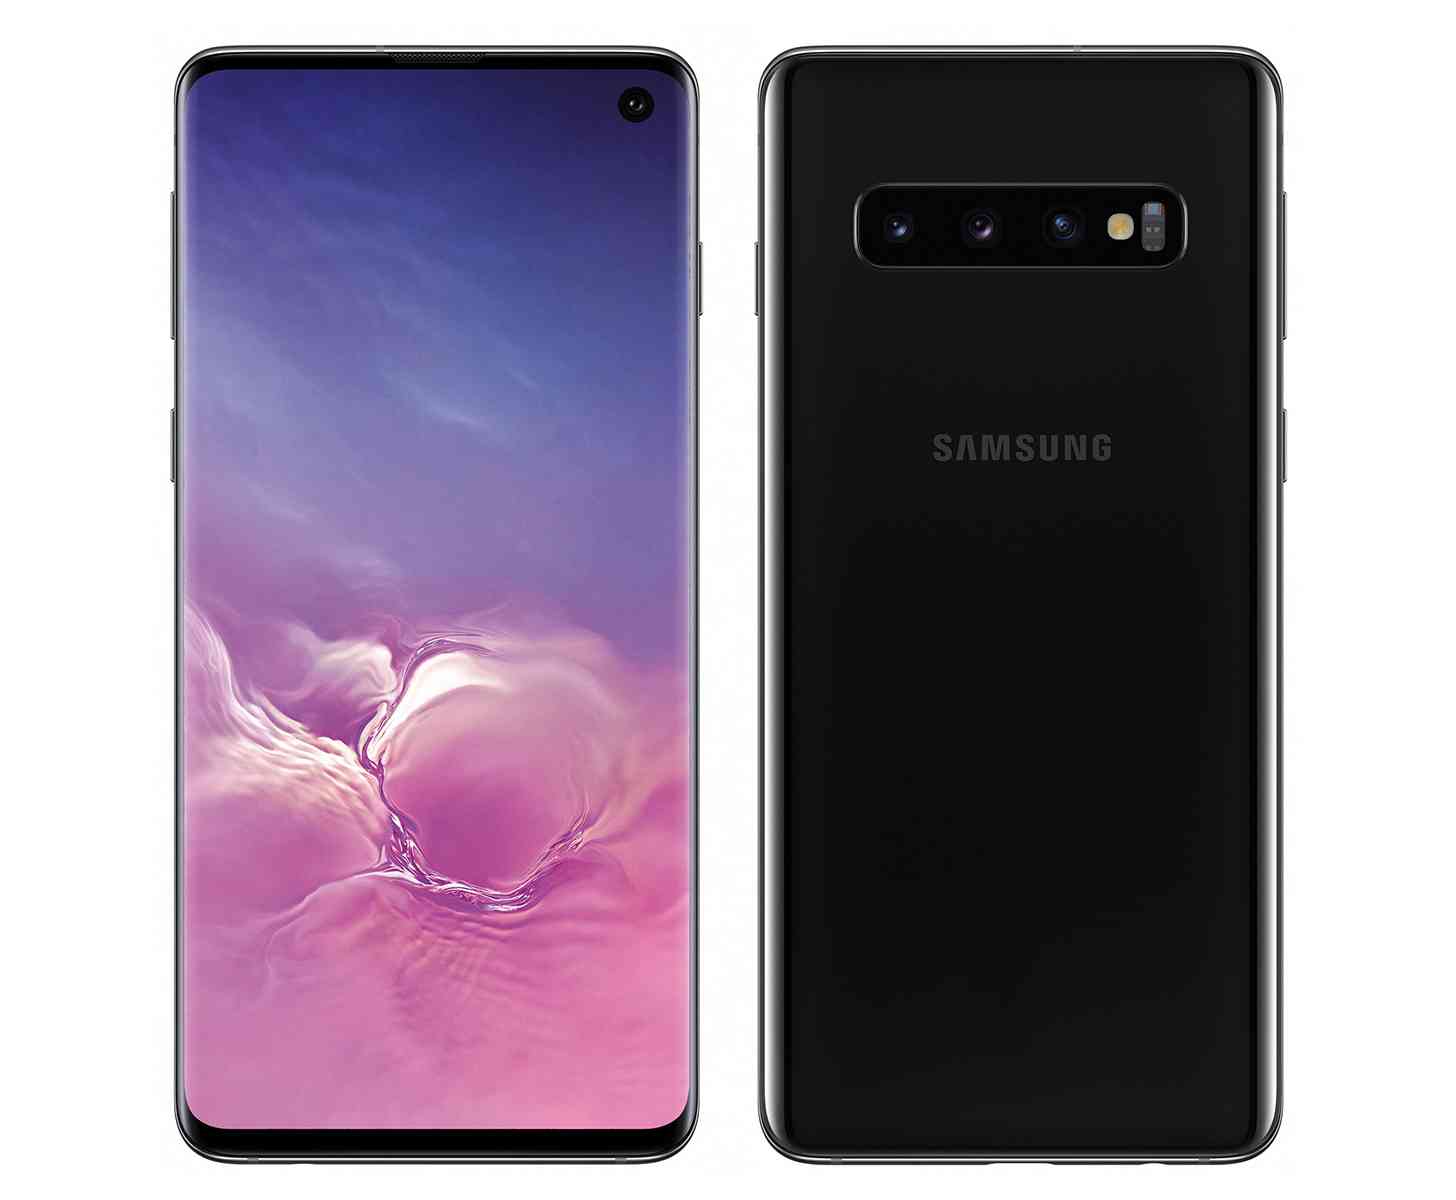 Samsung Galaxy S10 renders